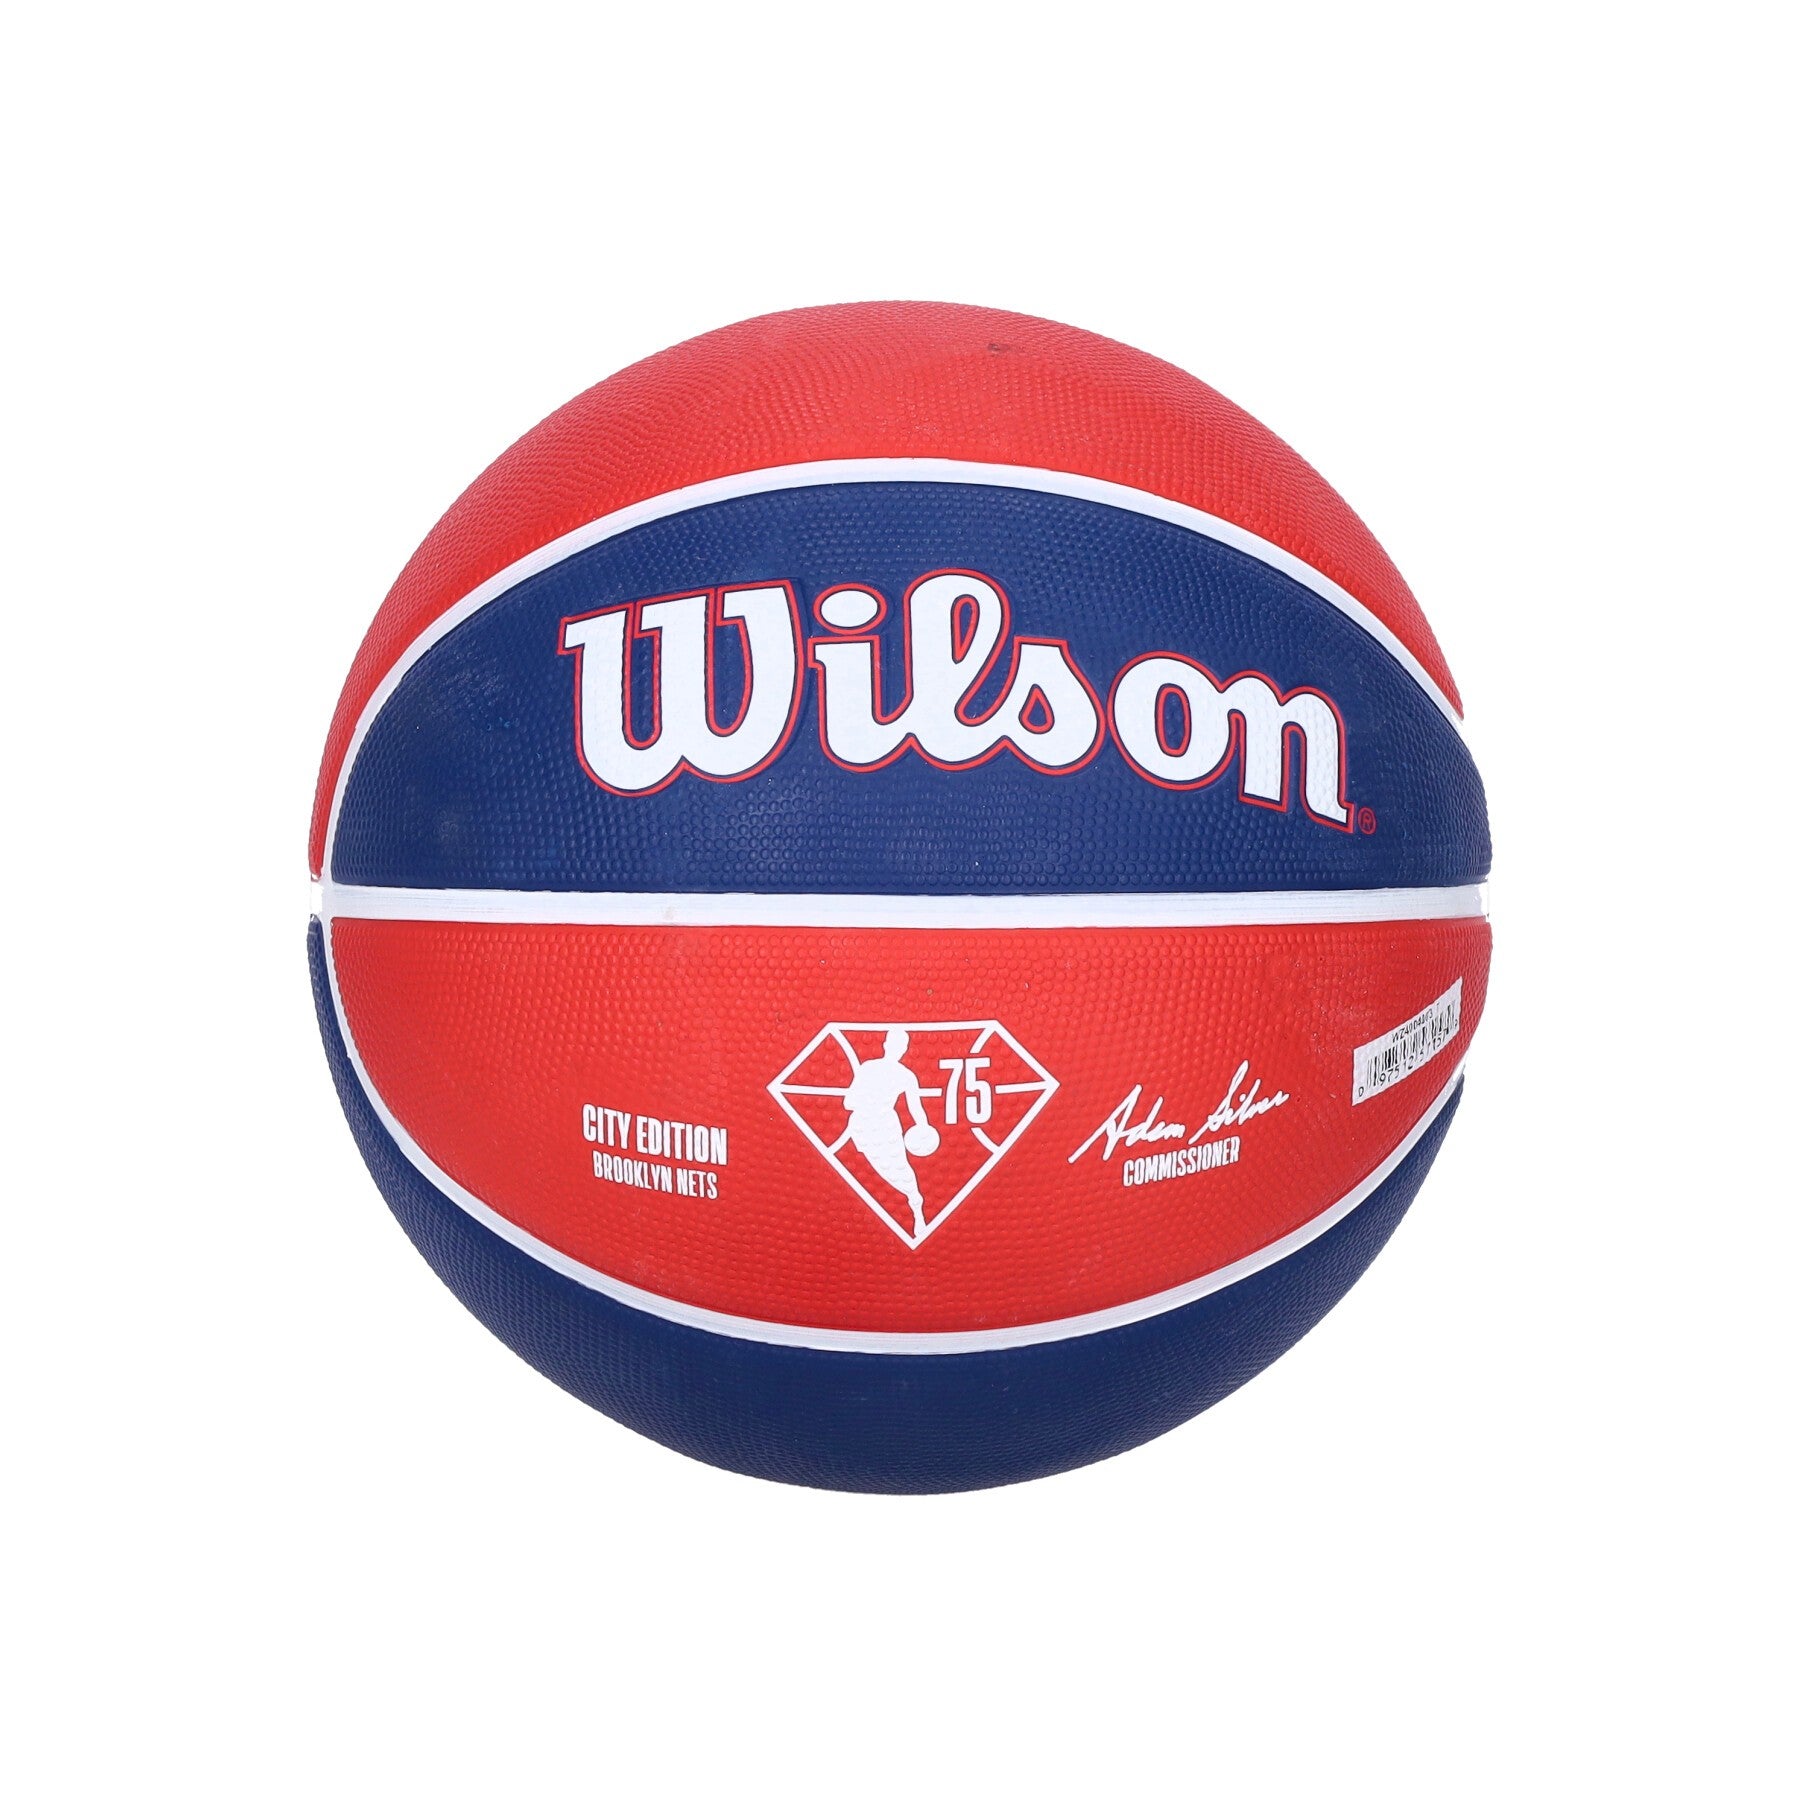 Wilson Team, Pallone Uomo Nba Team City Edition Size 7 Bronet, 